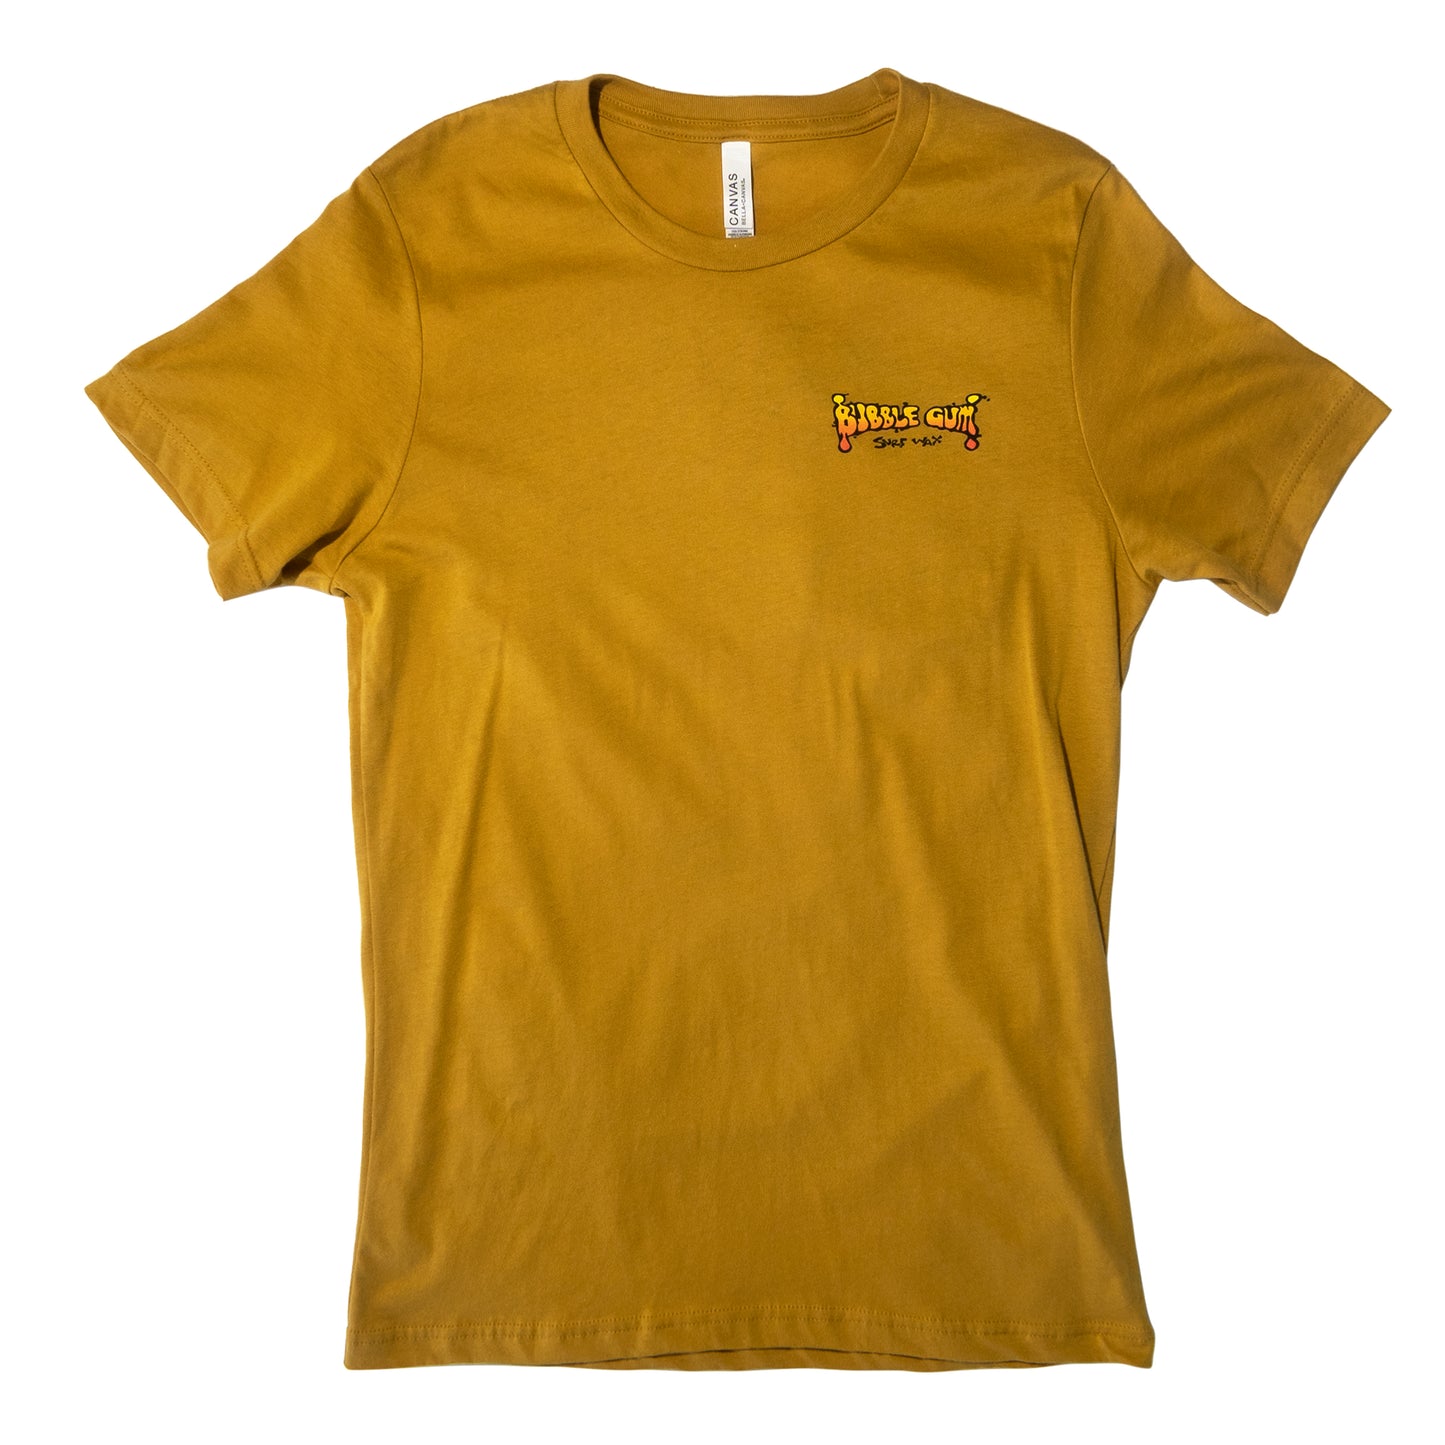 Kaleidoscope T-Shirt Yellow